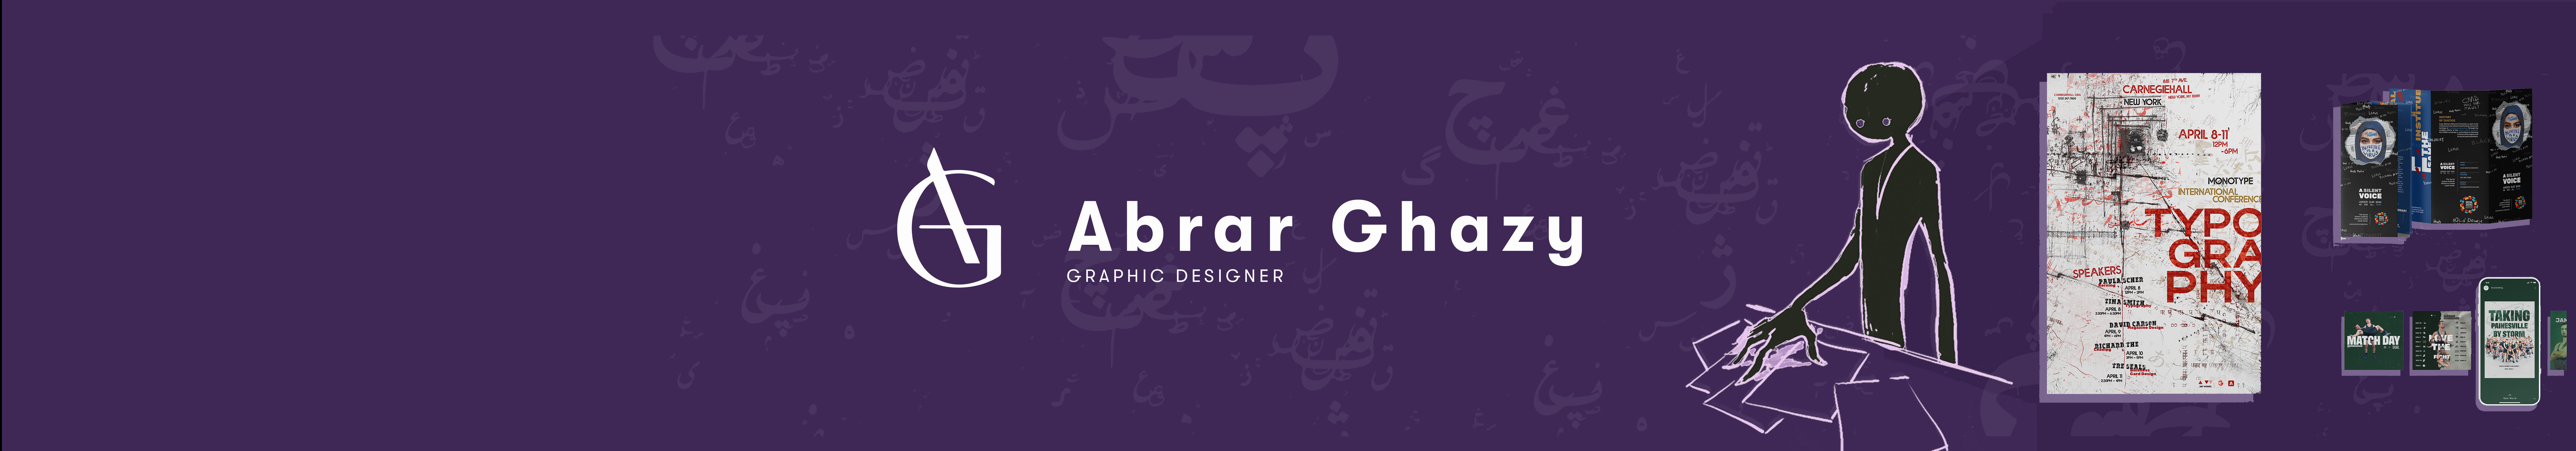 Banner de perfil de Abrar Ghazy